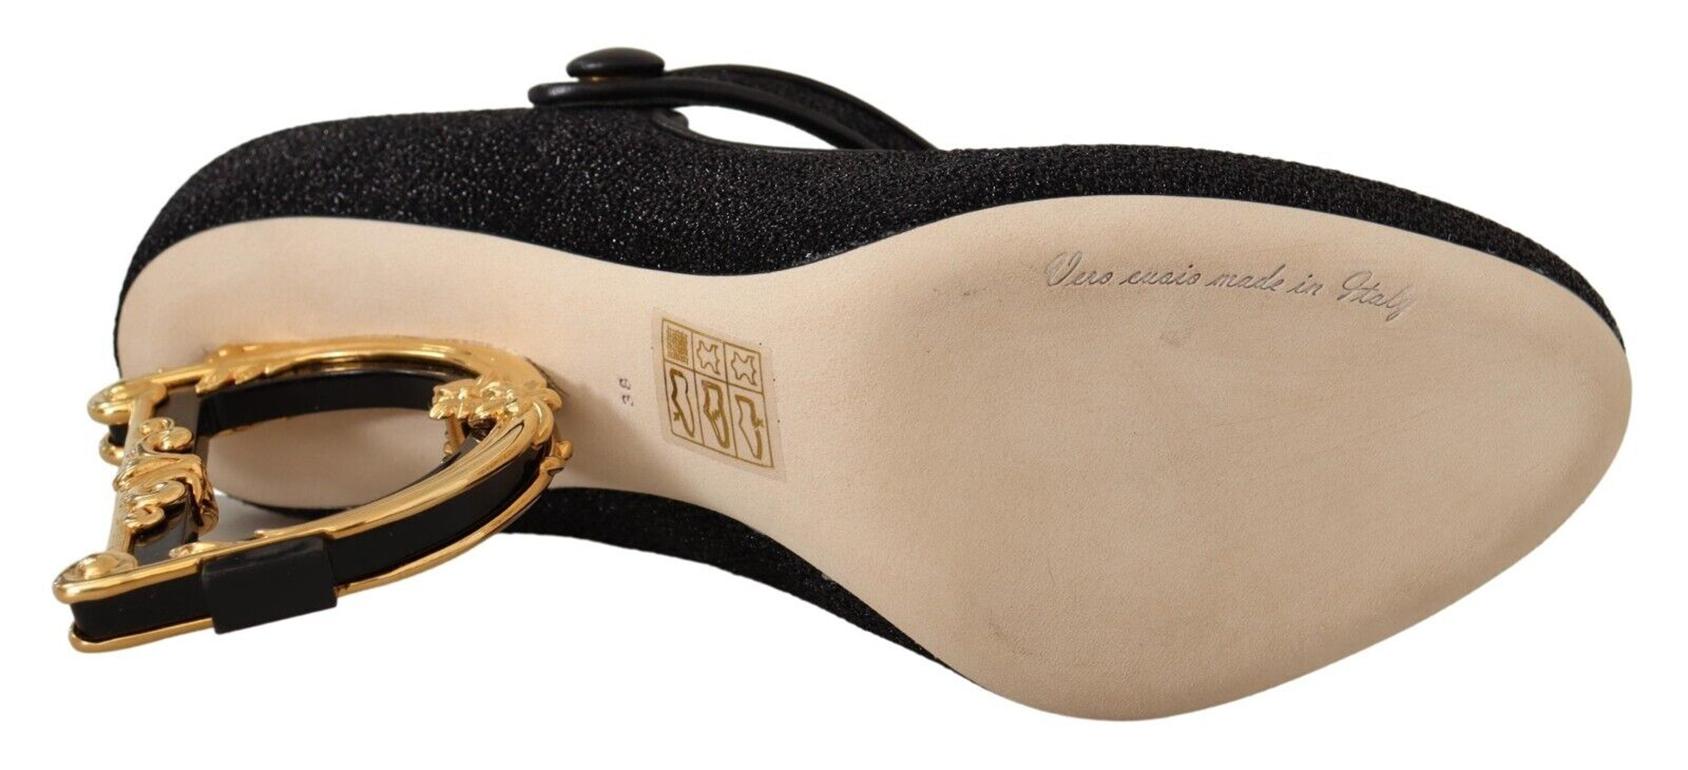 Dolce & Gabbana Black Cloth Gold DG Baroque Heels Shoes Pumps Devotion Mary Jane 2